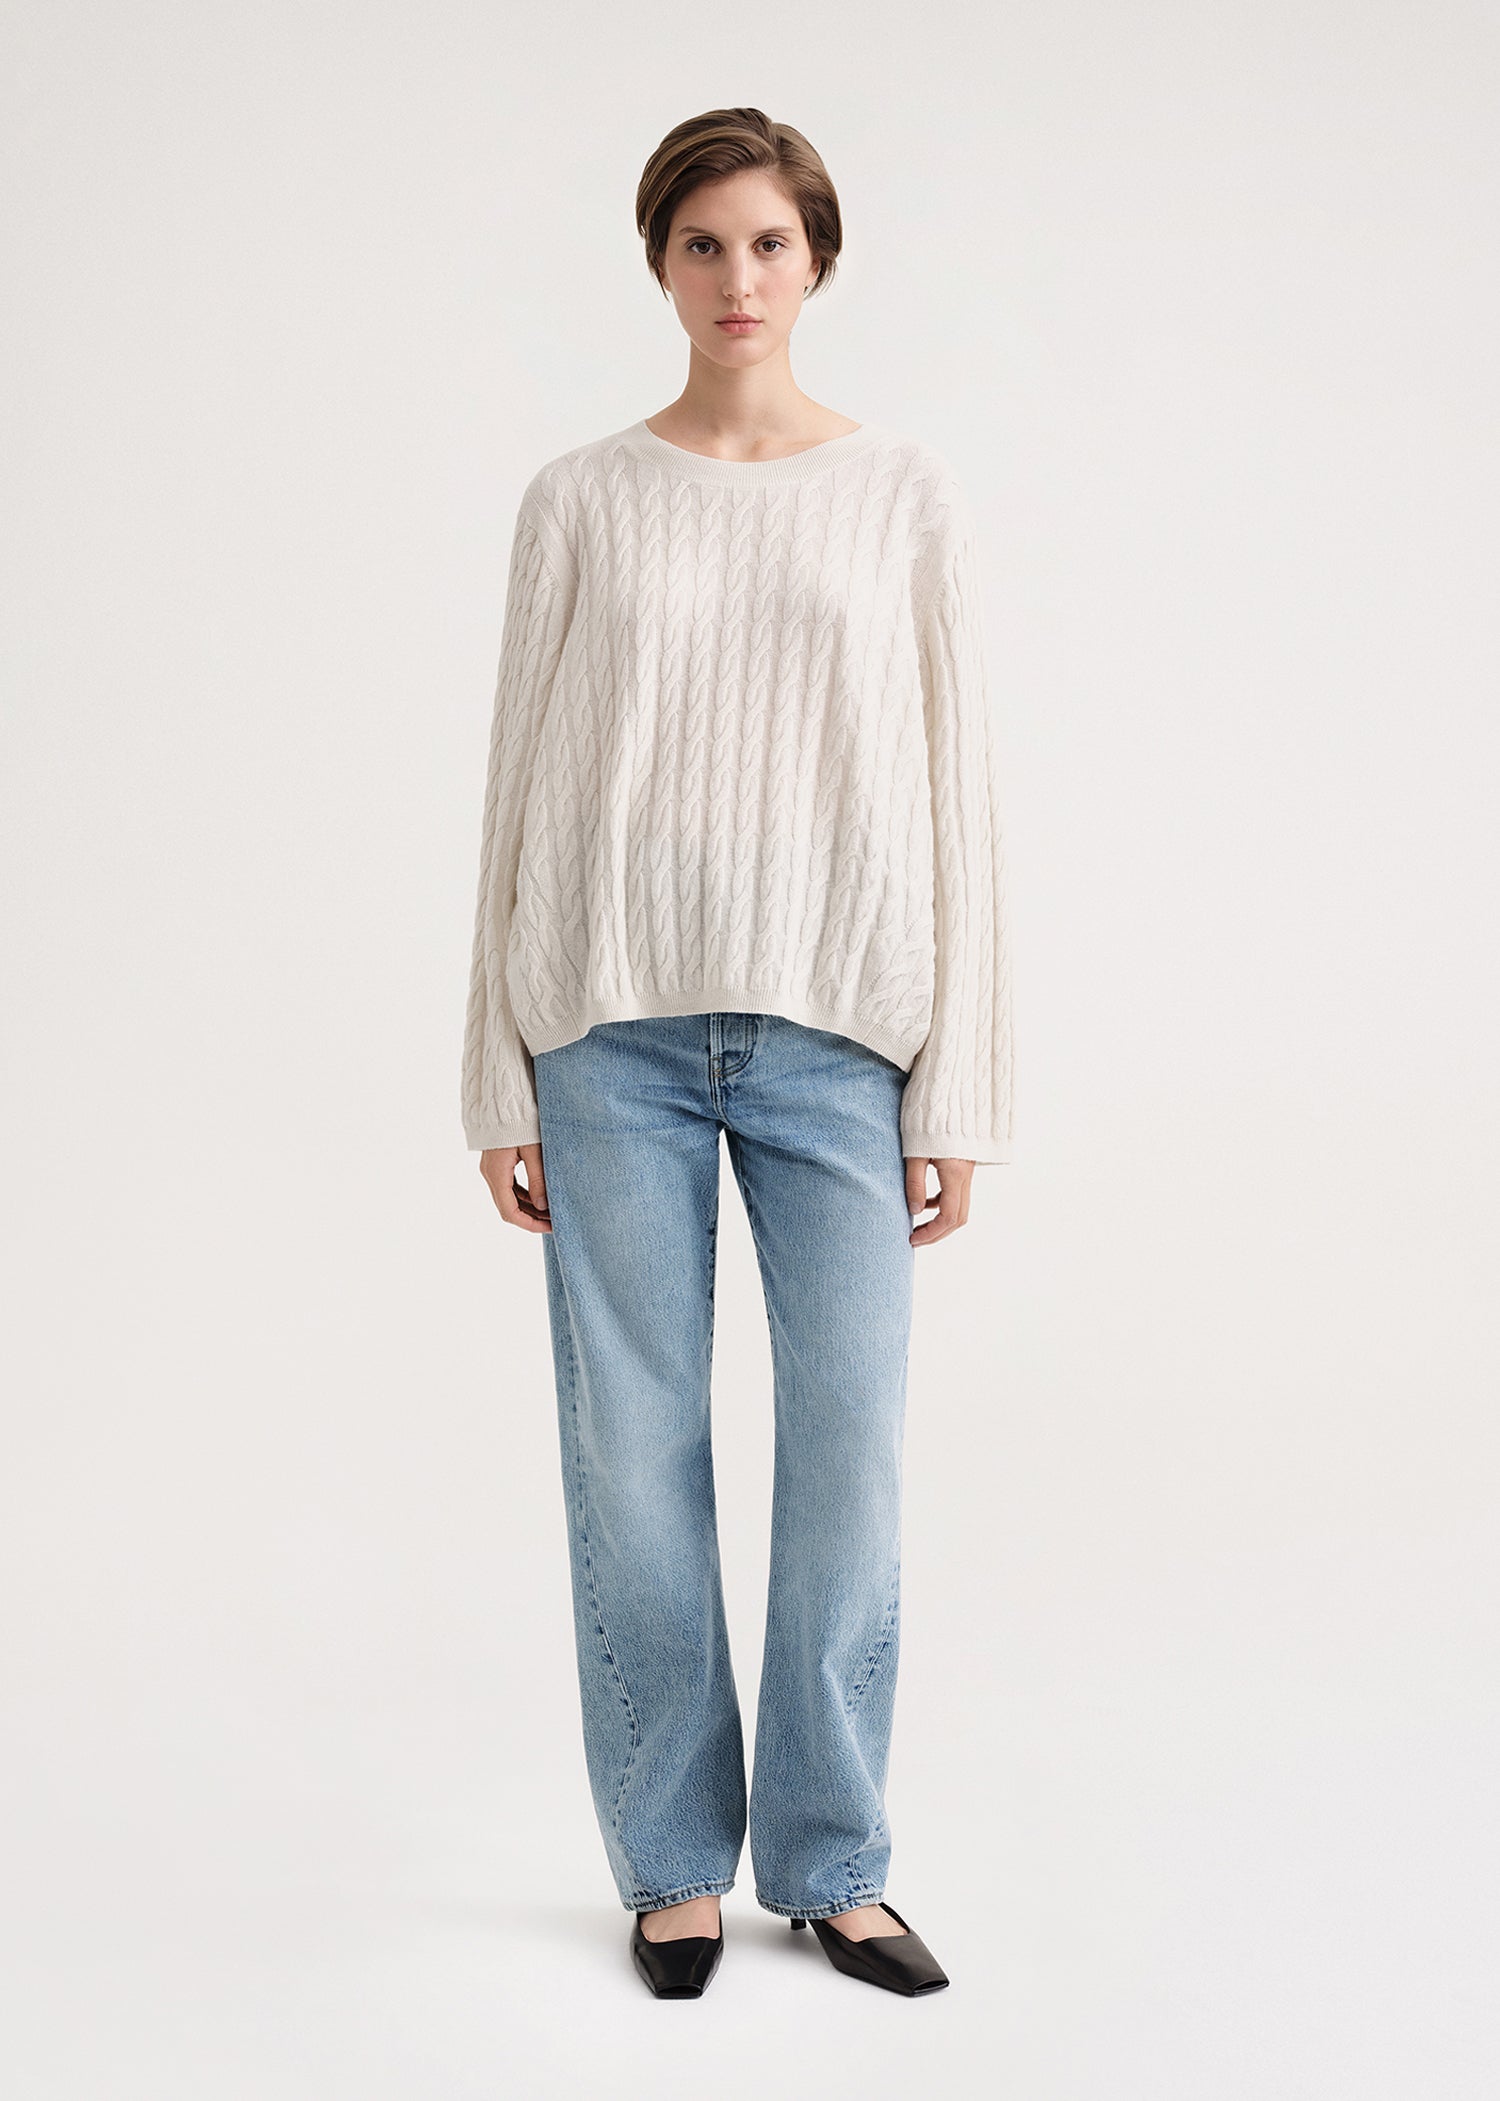 Cashmere cable knit off-white – Totême